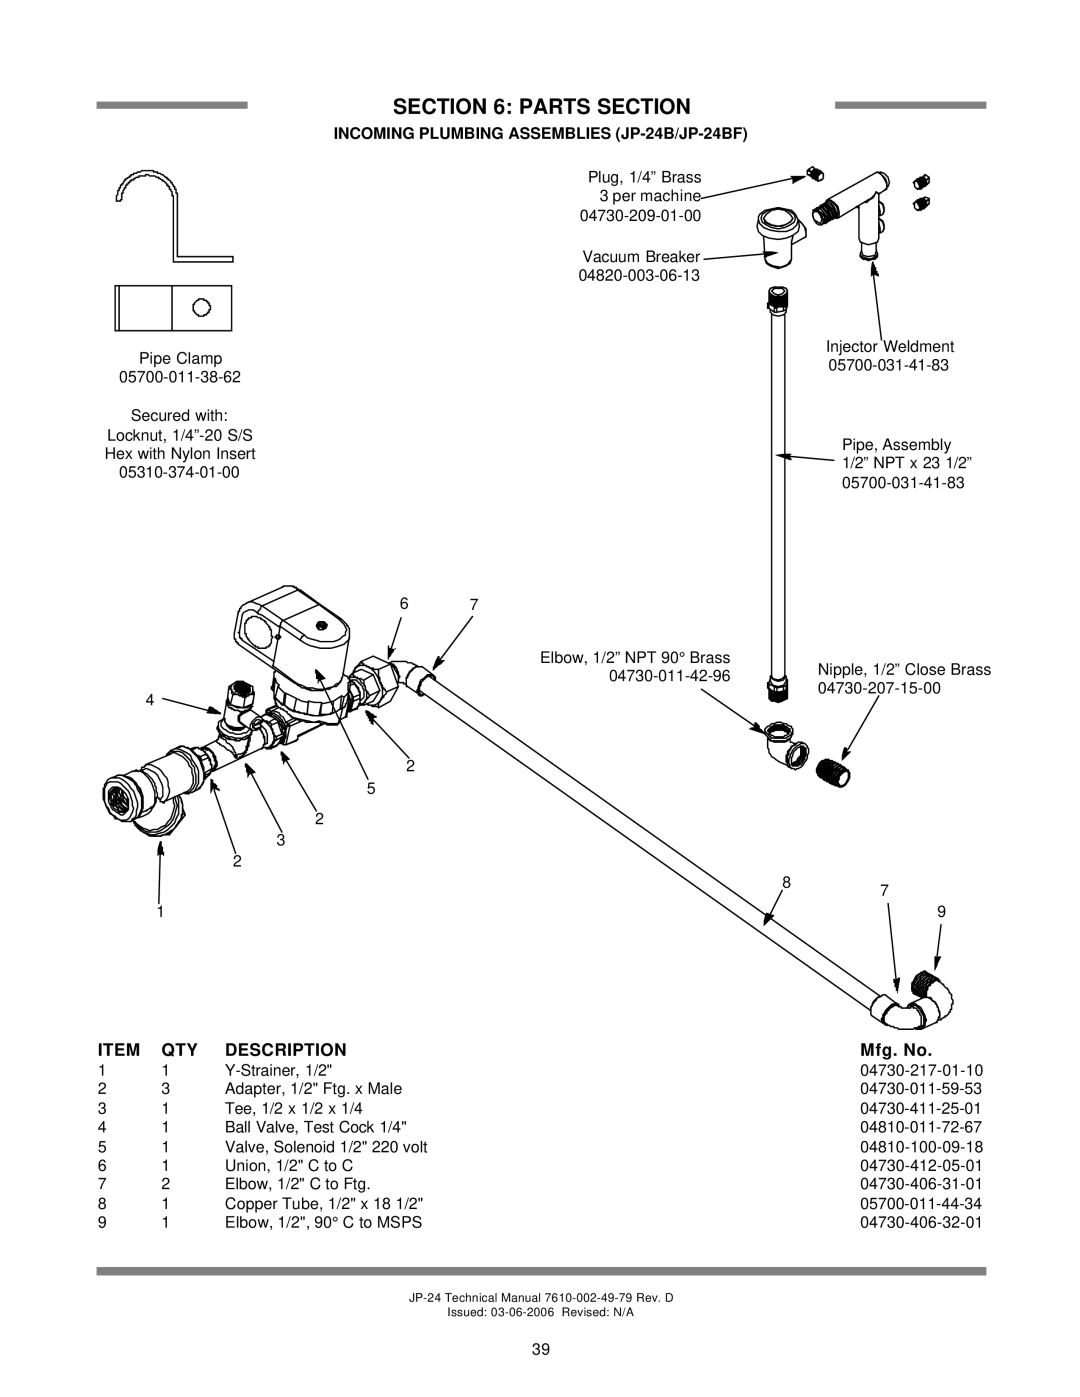 Jackson jp-24b, JP-24F technical manual INCOMING PLUMBING ASSEMBLIES JP-24B/JP-24BF, Parts Section, Description, Mfg. No 